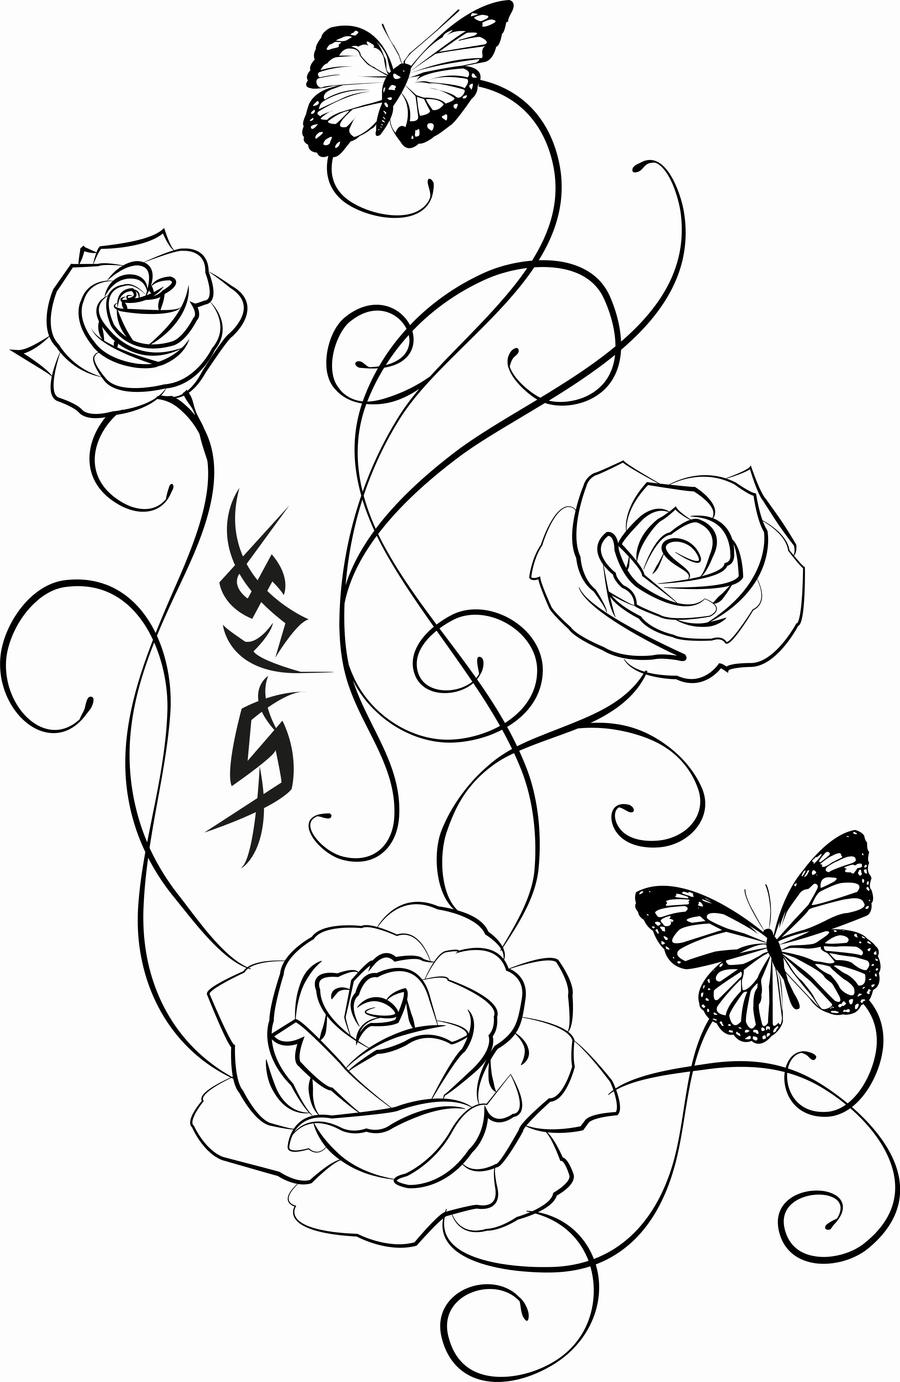 Rose tattoo by Ariesmzj on